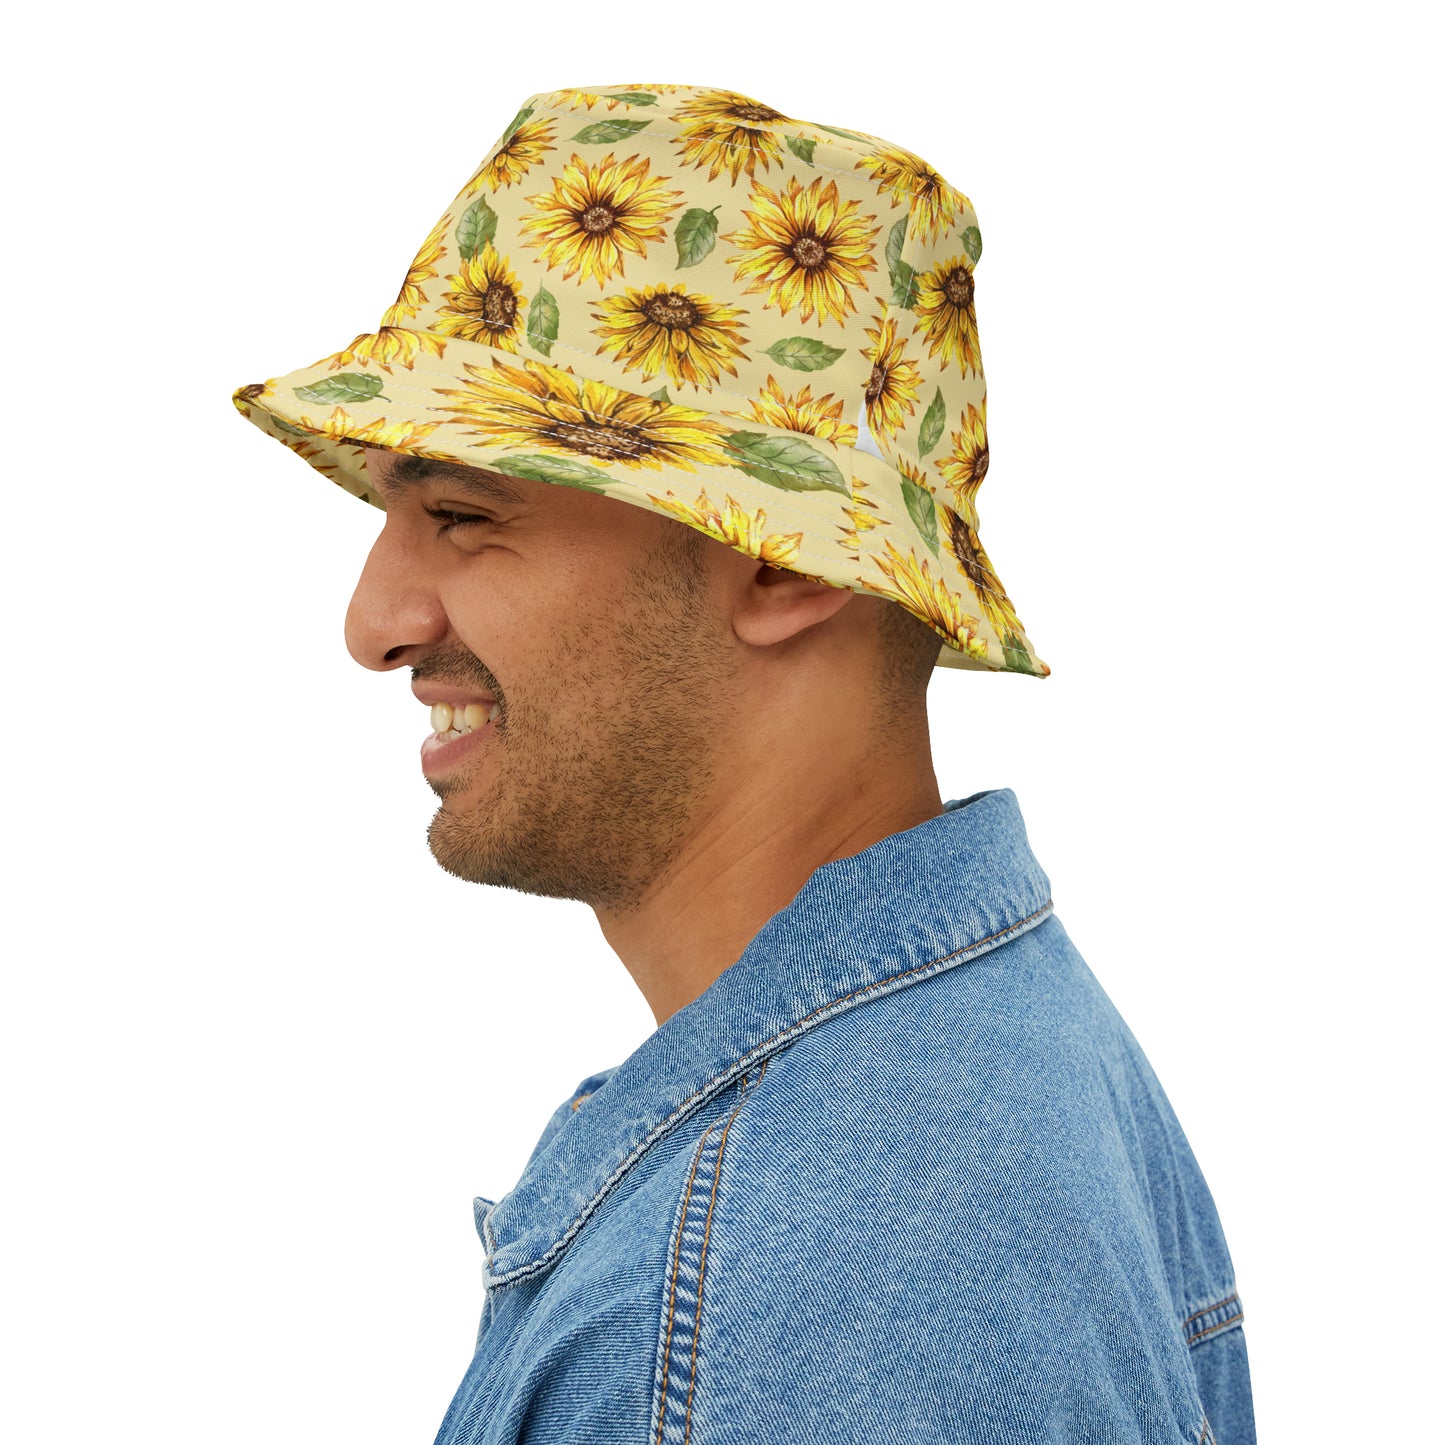 Man wearing the hat